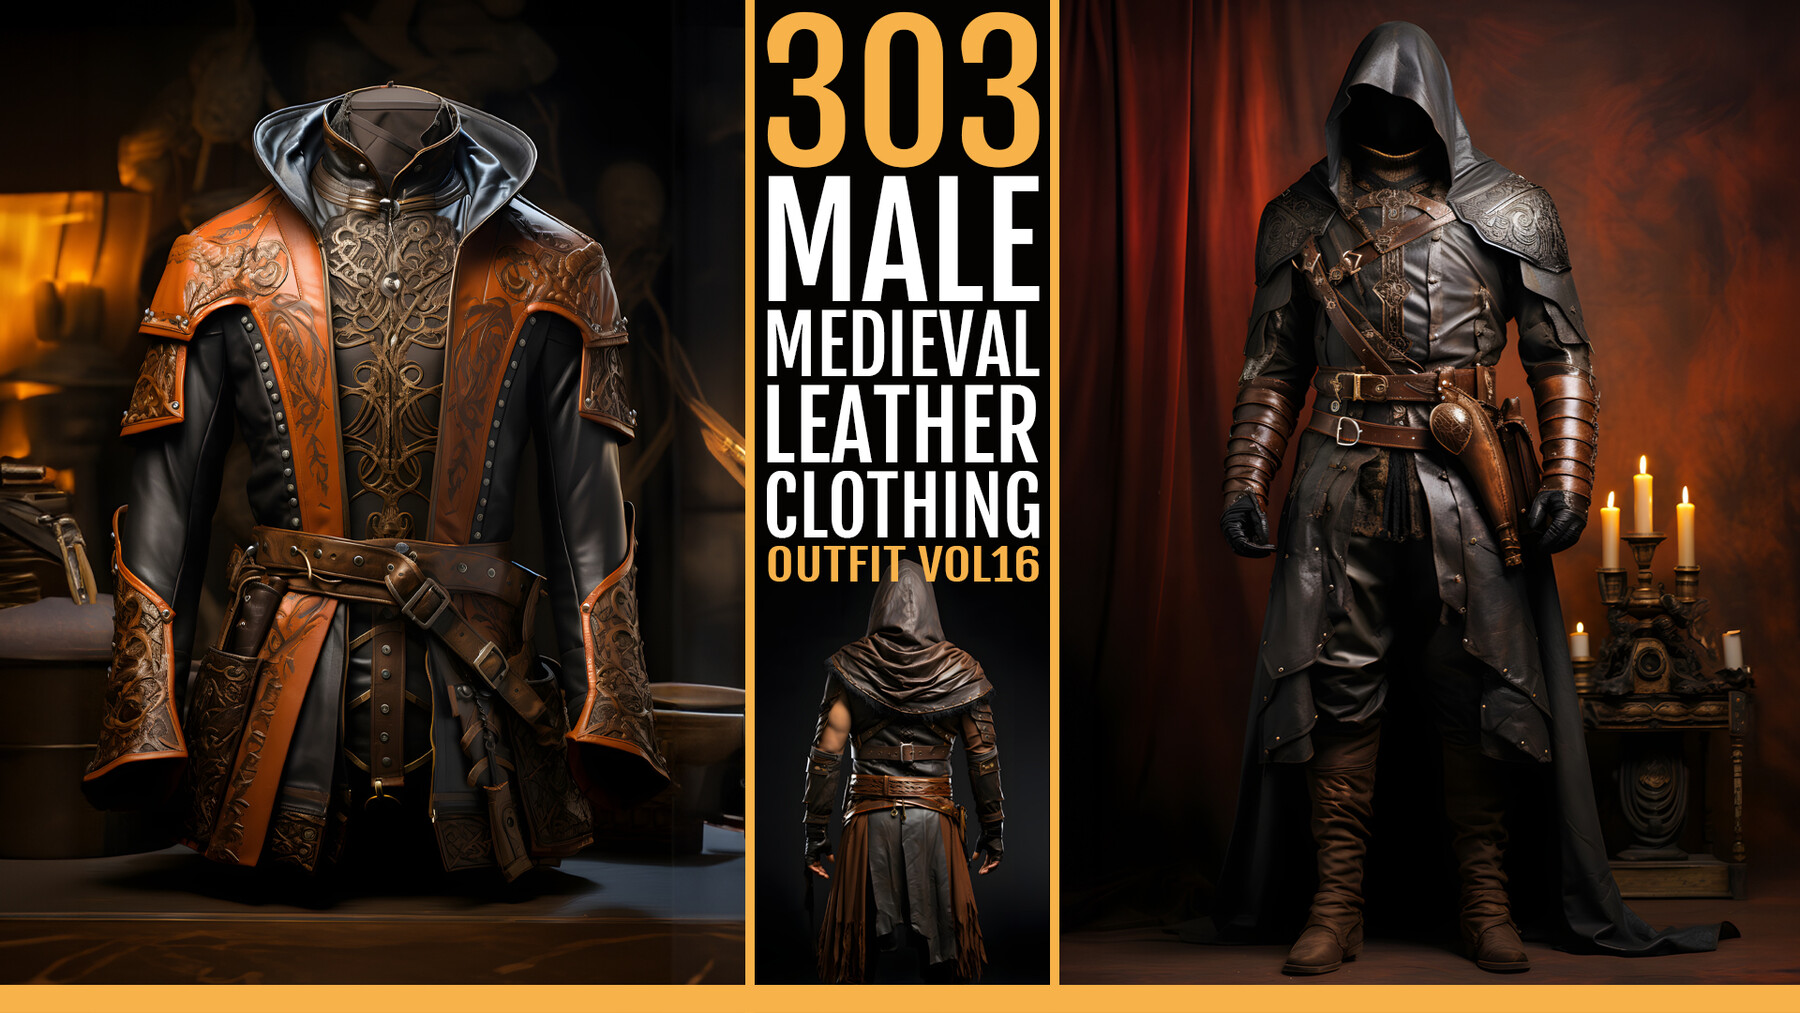 ArtStation - 303 Men's Medieval Leather Clothing VOL16